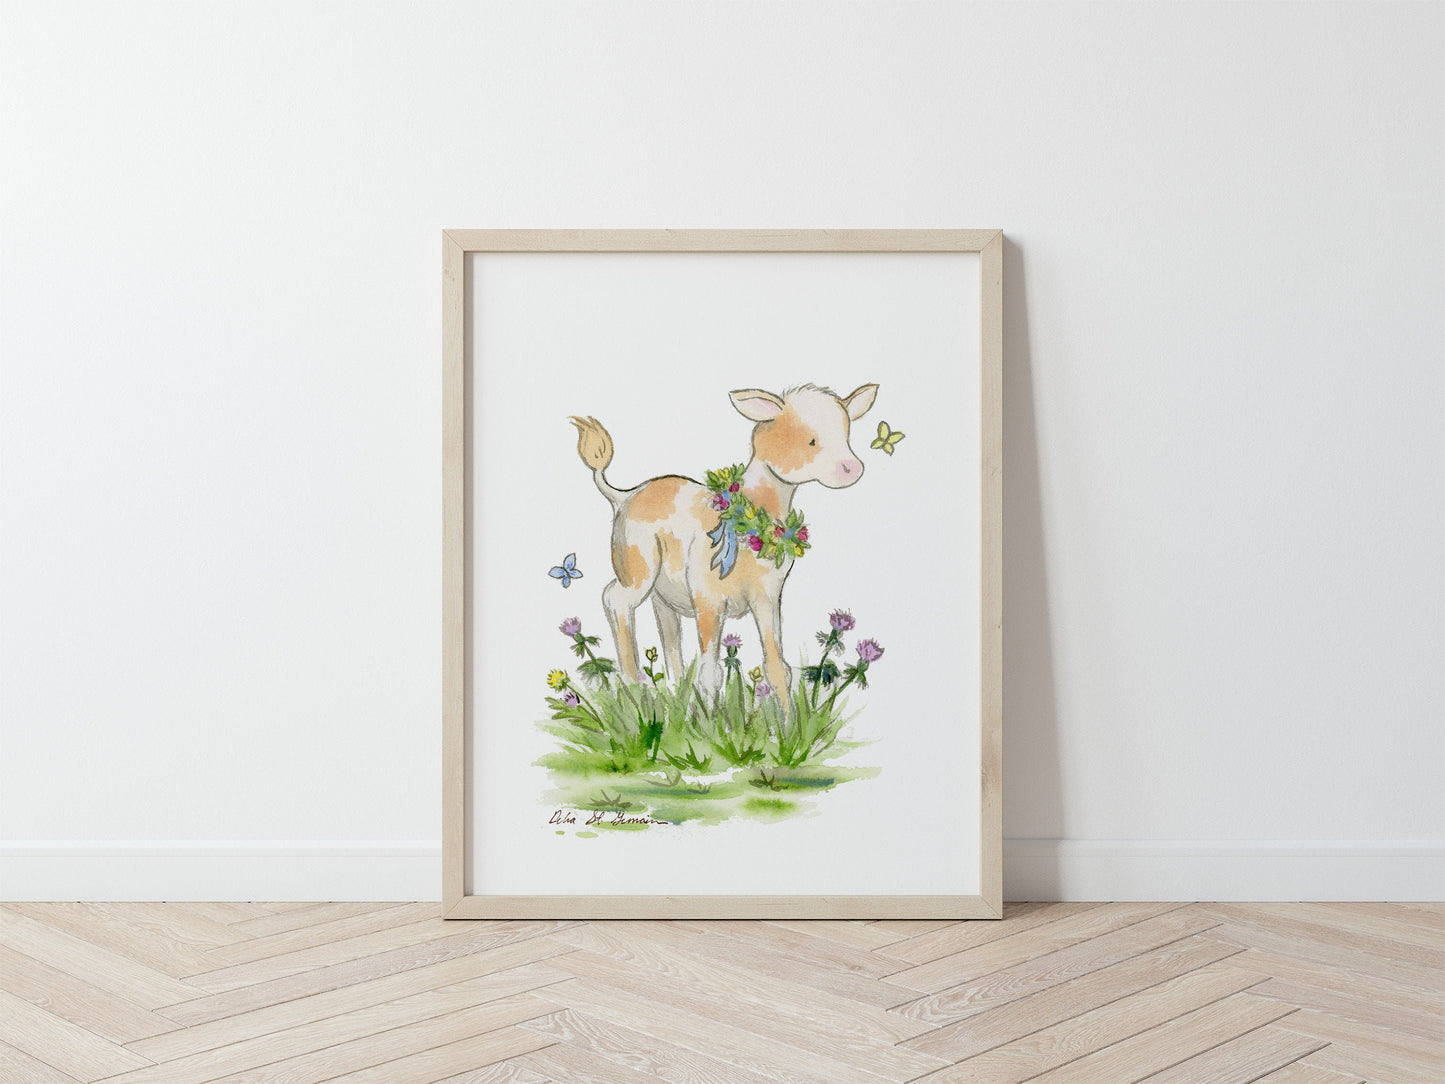 Children's Art, Farm Nursery Art, Calf Nursery Print, Cow Nursery Art, Kids Wall Art, Farm Nursery Decor, Cute Cow Art, Baby Cow Picture